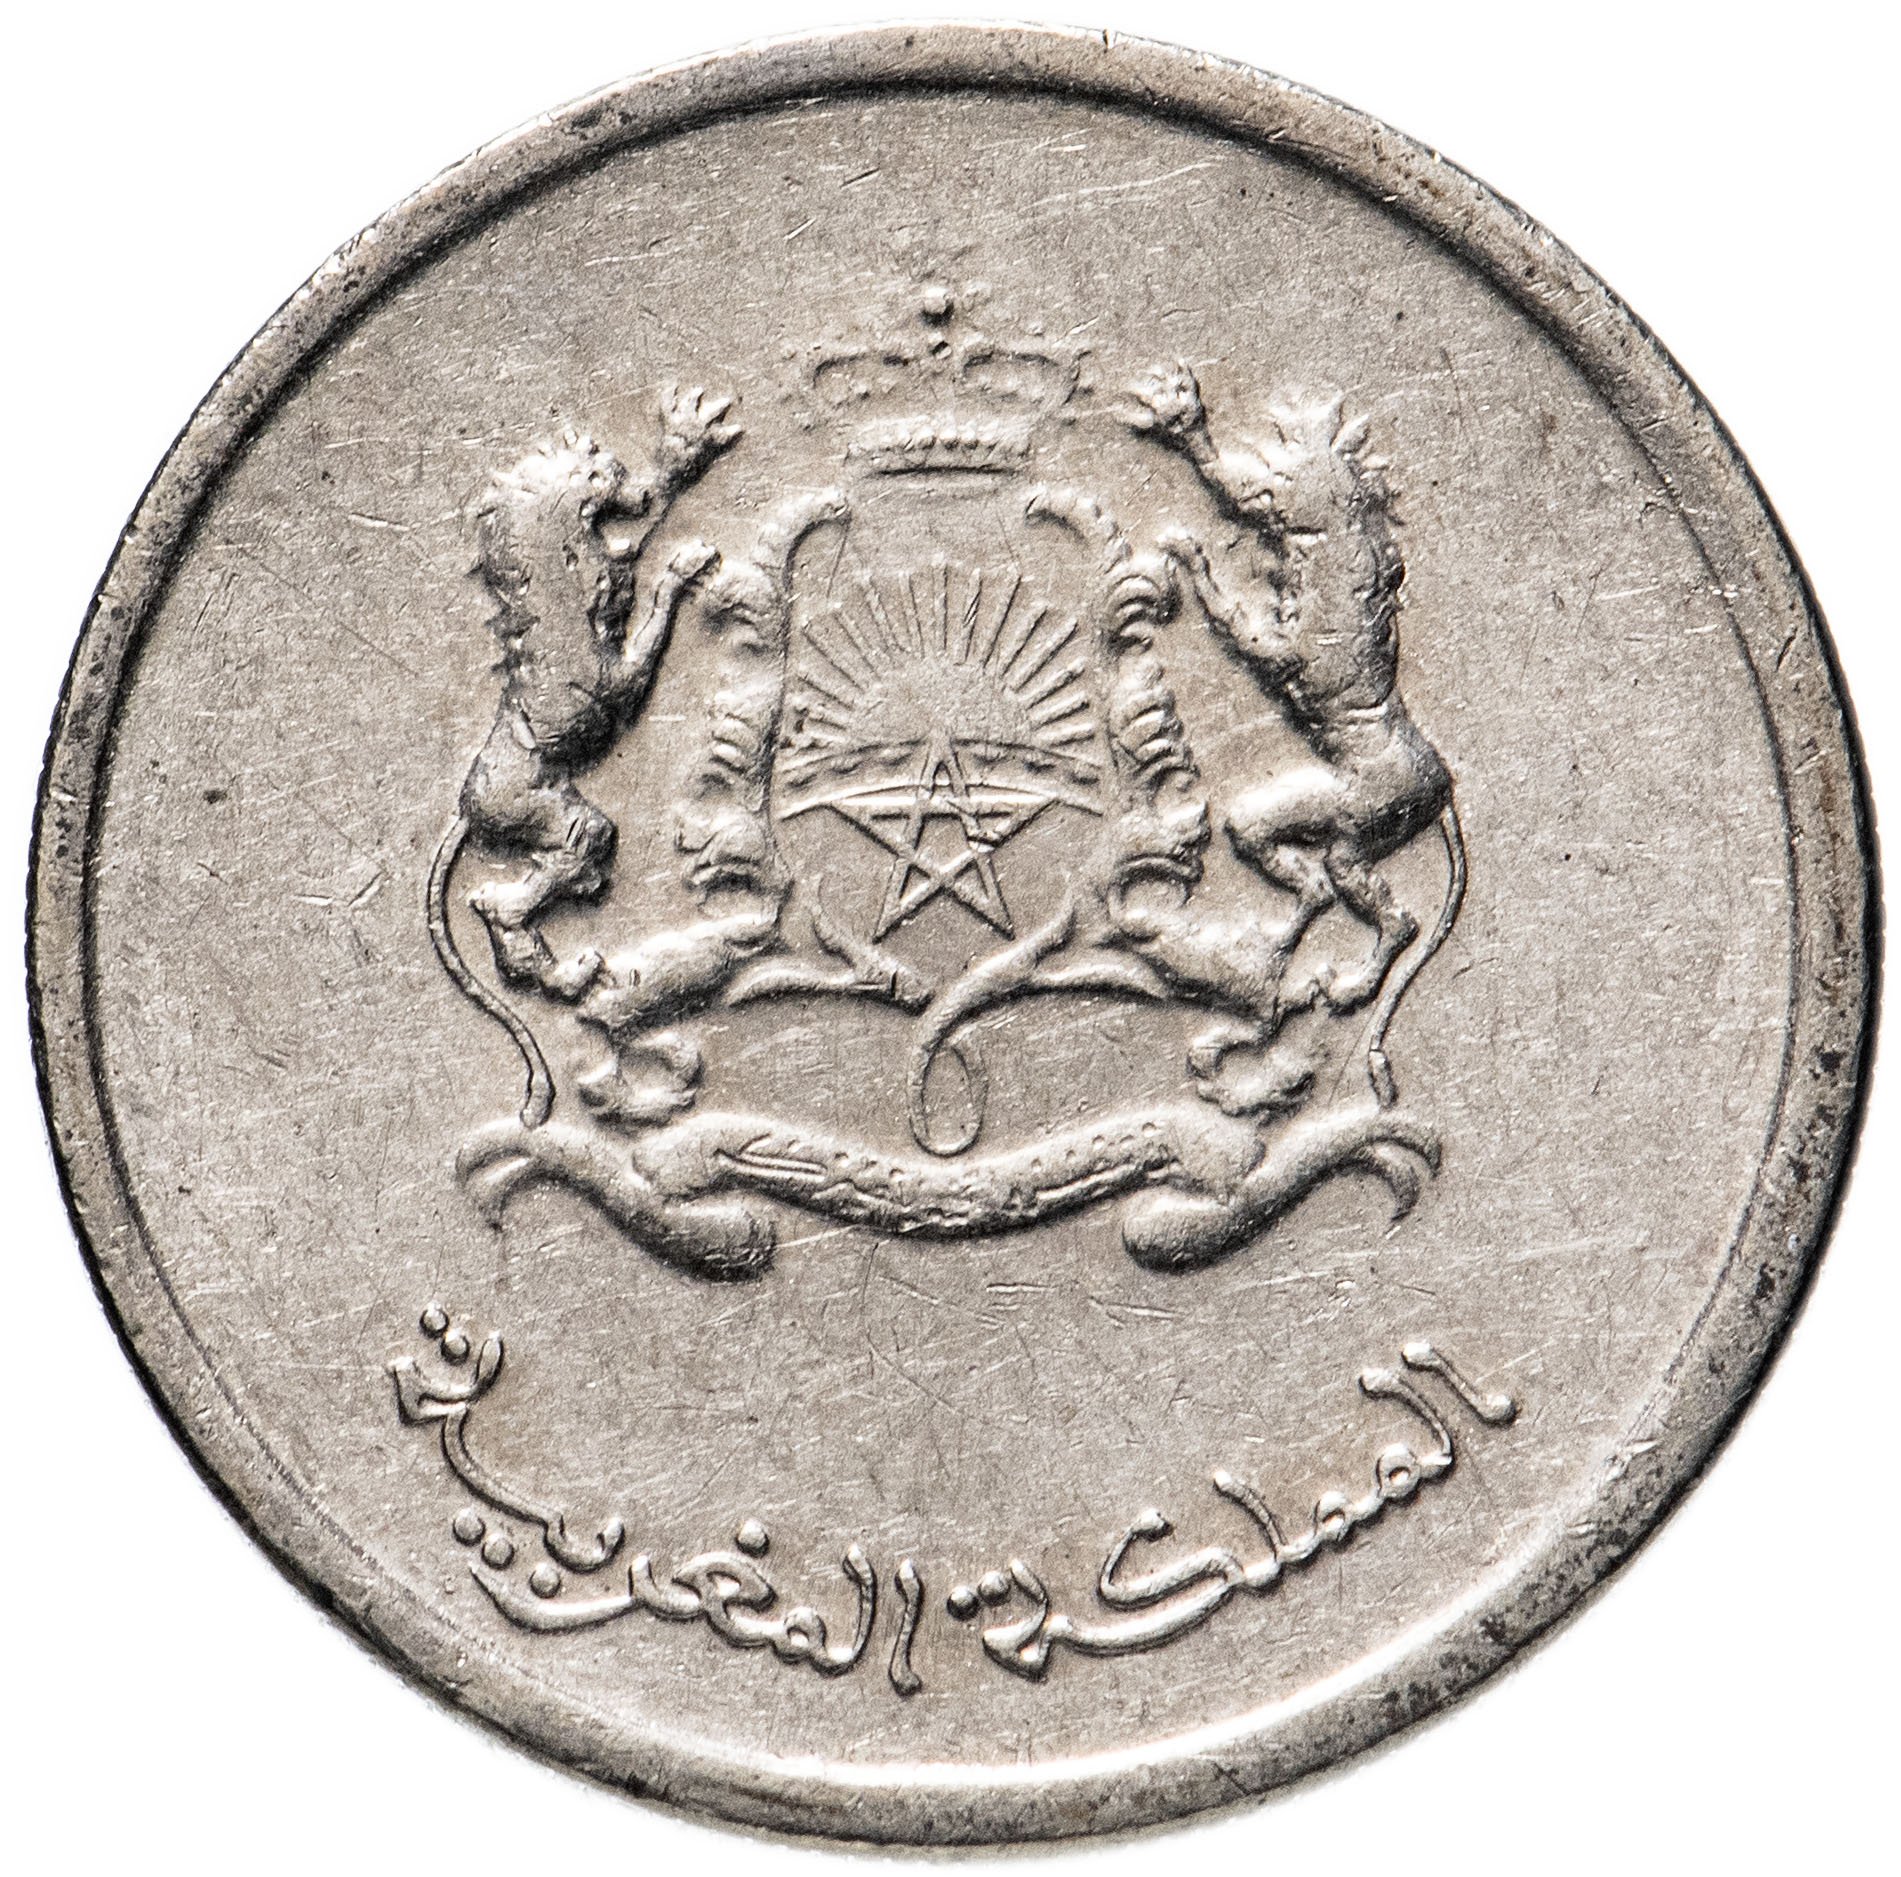 2 дирхама. Арабские монеты Марокко. Дирхамы монеты. Арабская монета 1/2. Два дирхама монета.